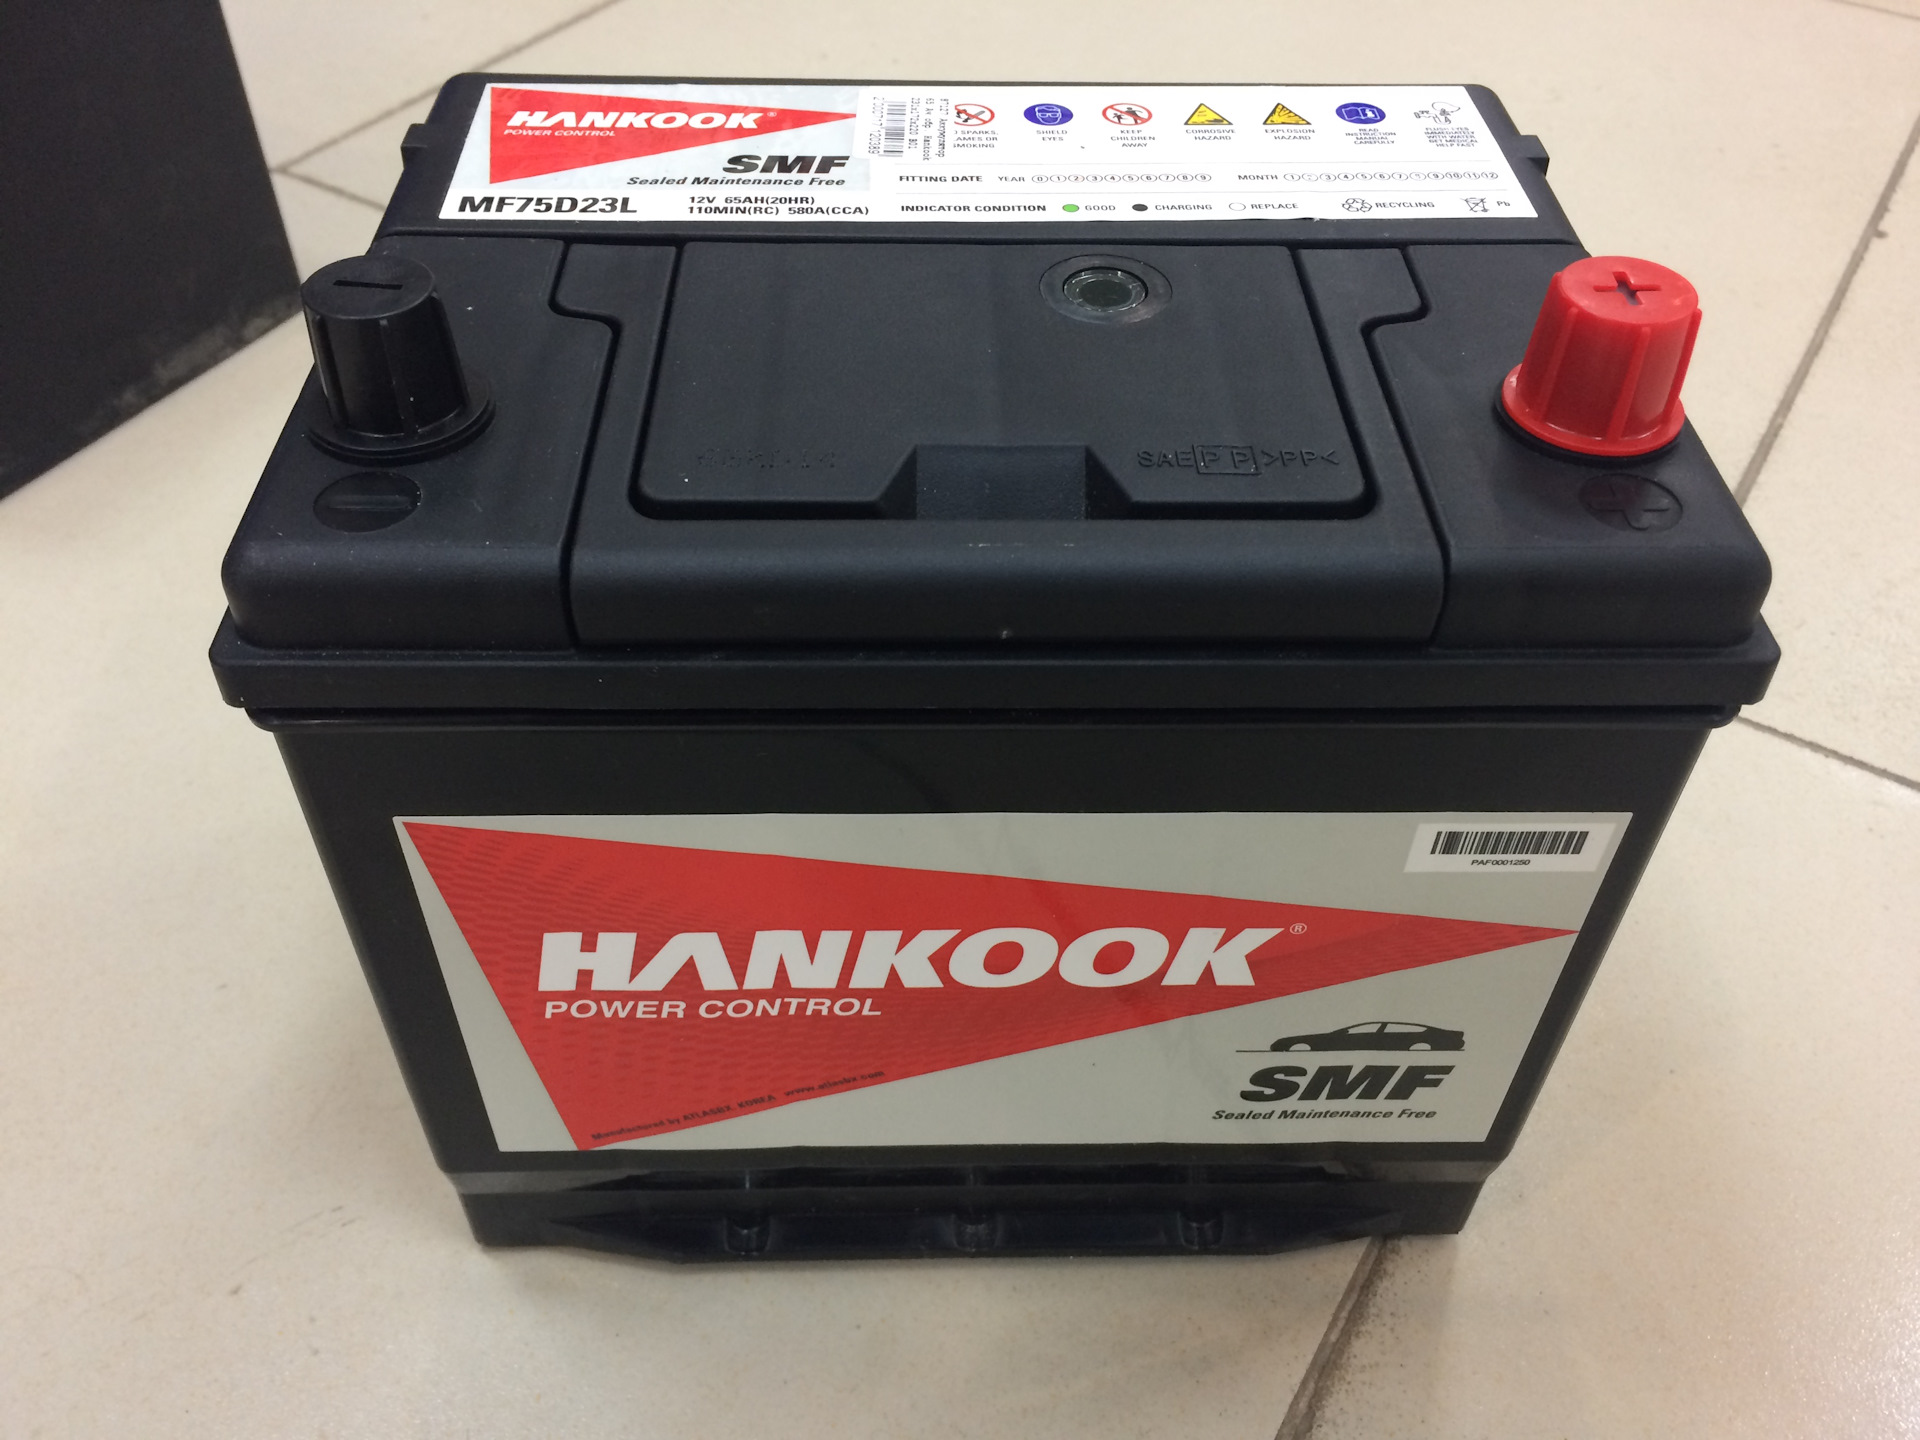 75d23l battery. Аккумулятор автомобильный Hankook mf75d23l. АКБ Hankook 75d23l. 75d23l(BH). Аккумулятор 75d23l 550.